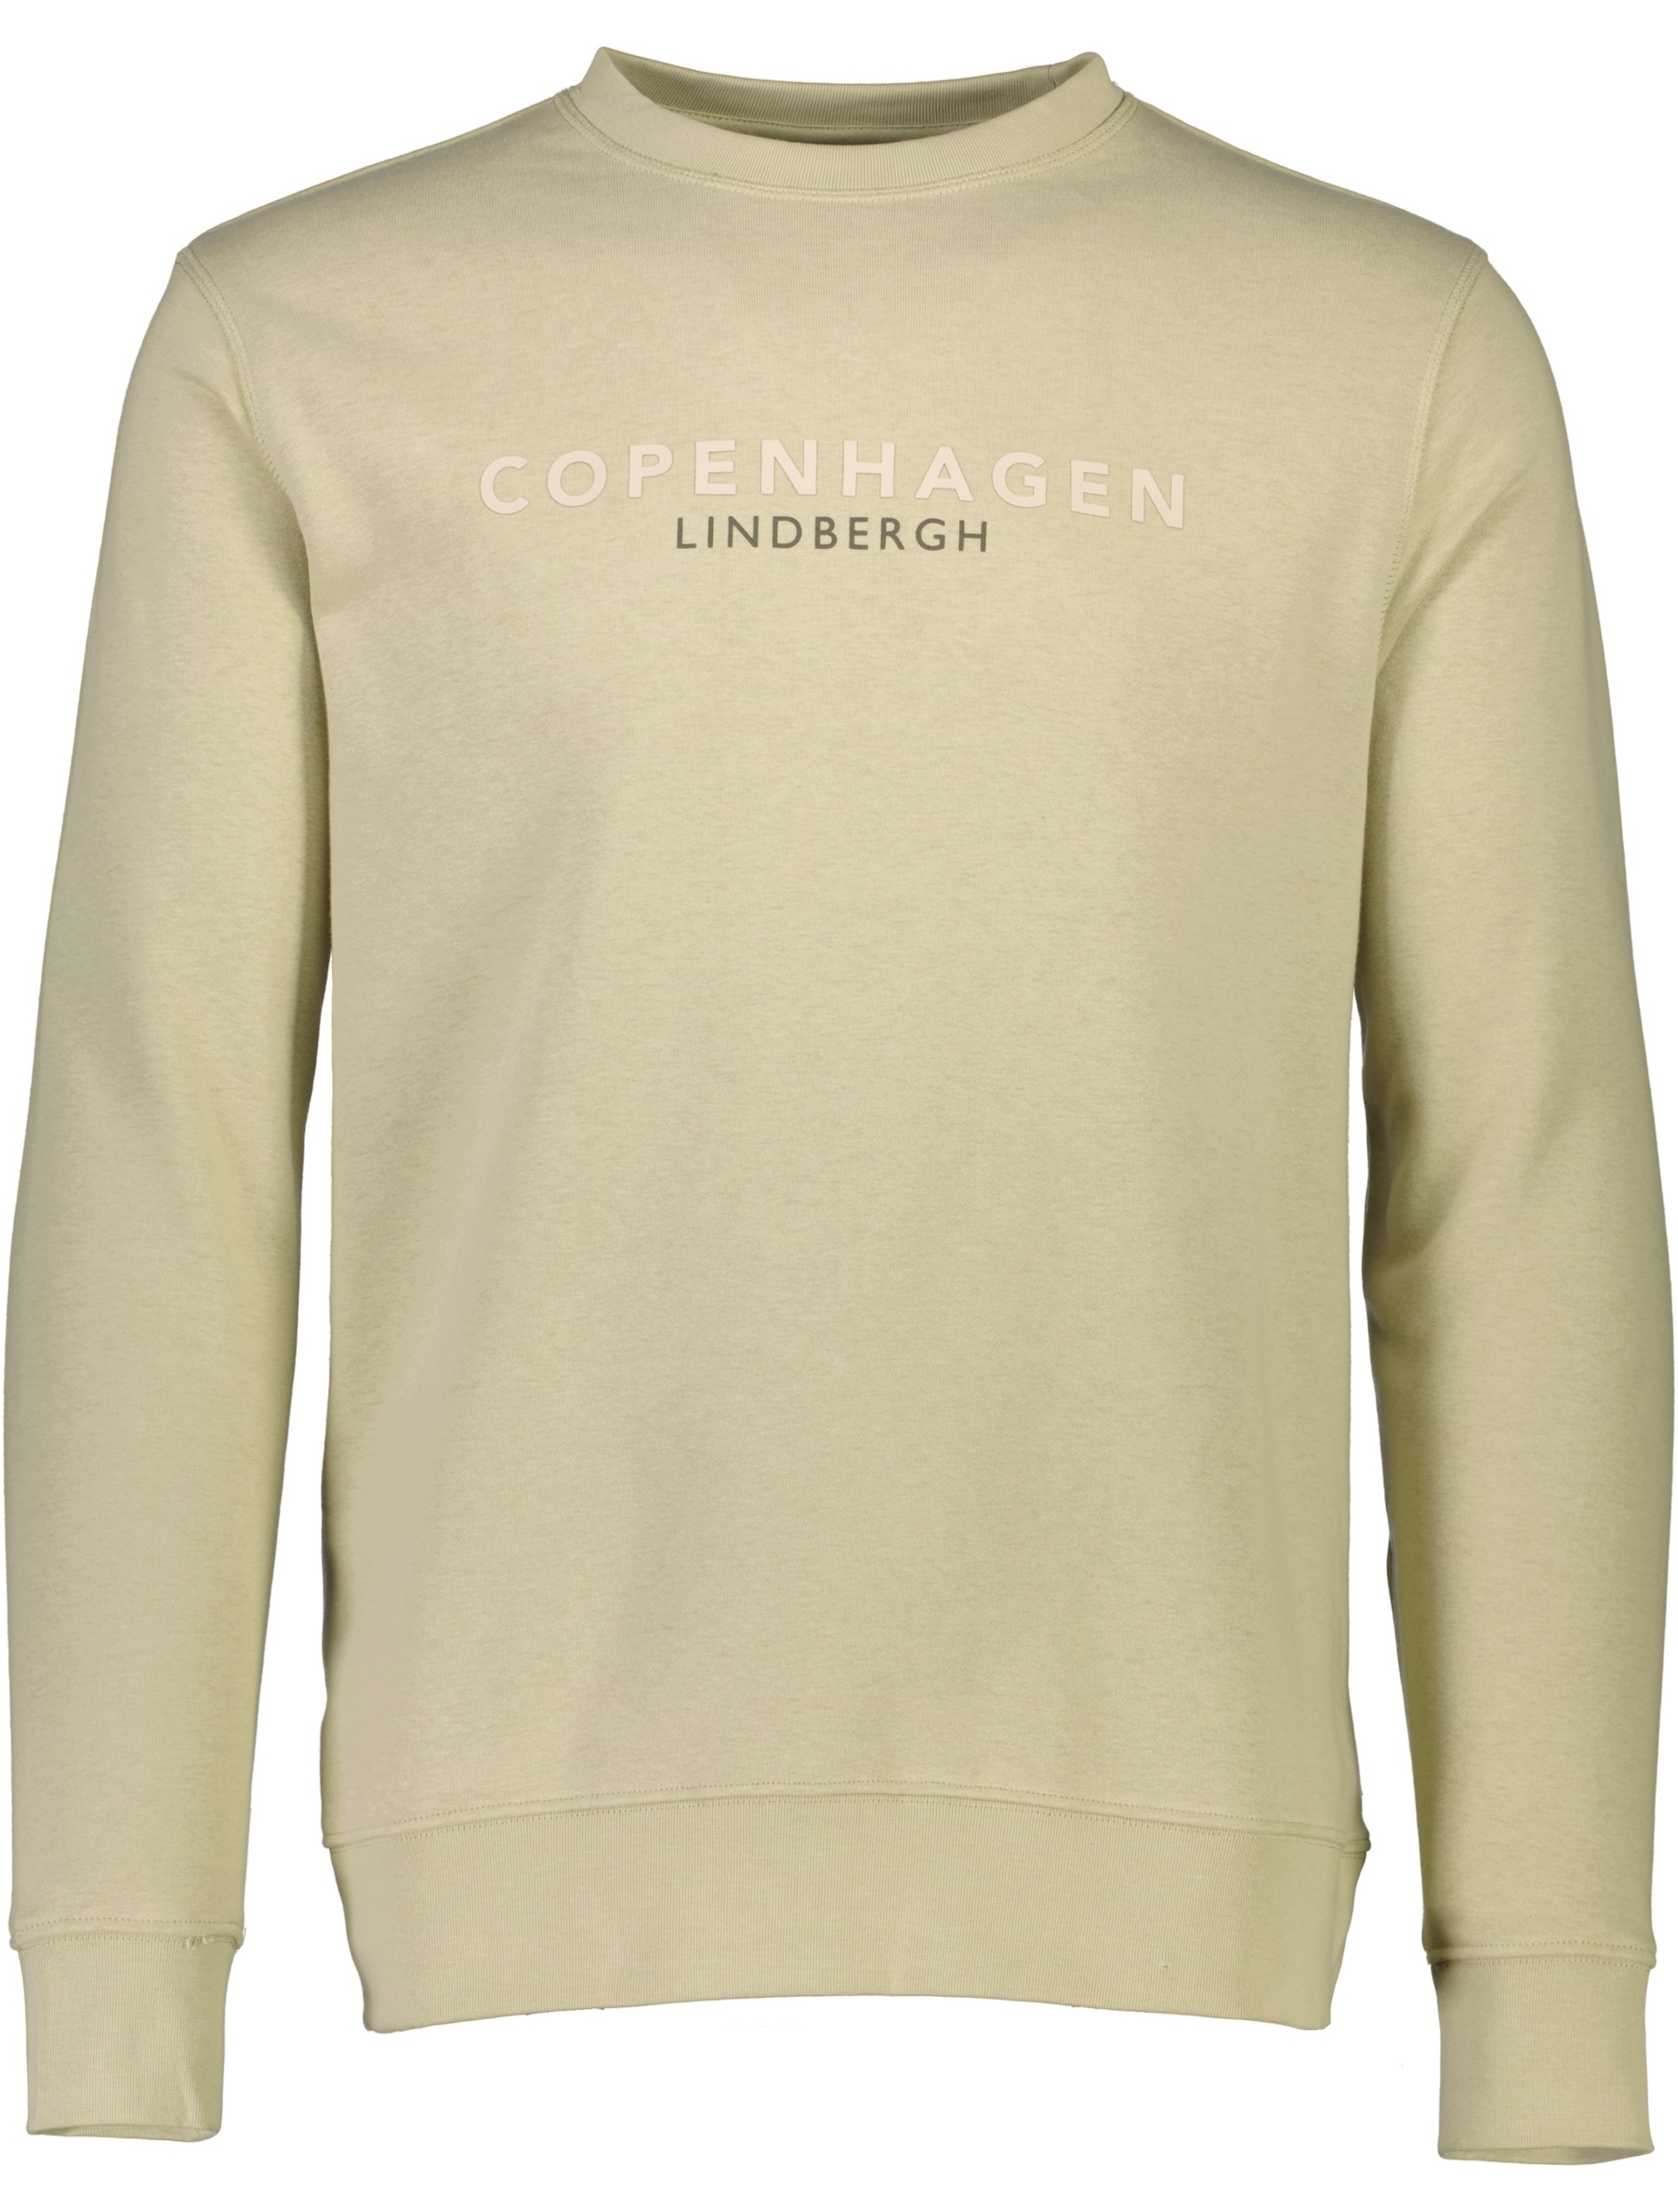 Lindbergh Sweater groen / pale army